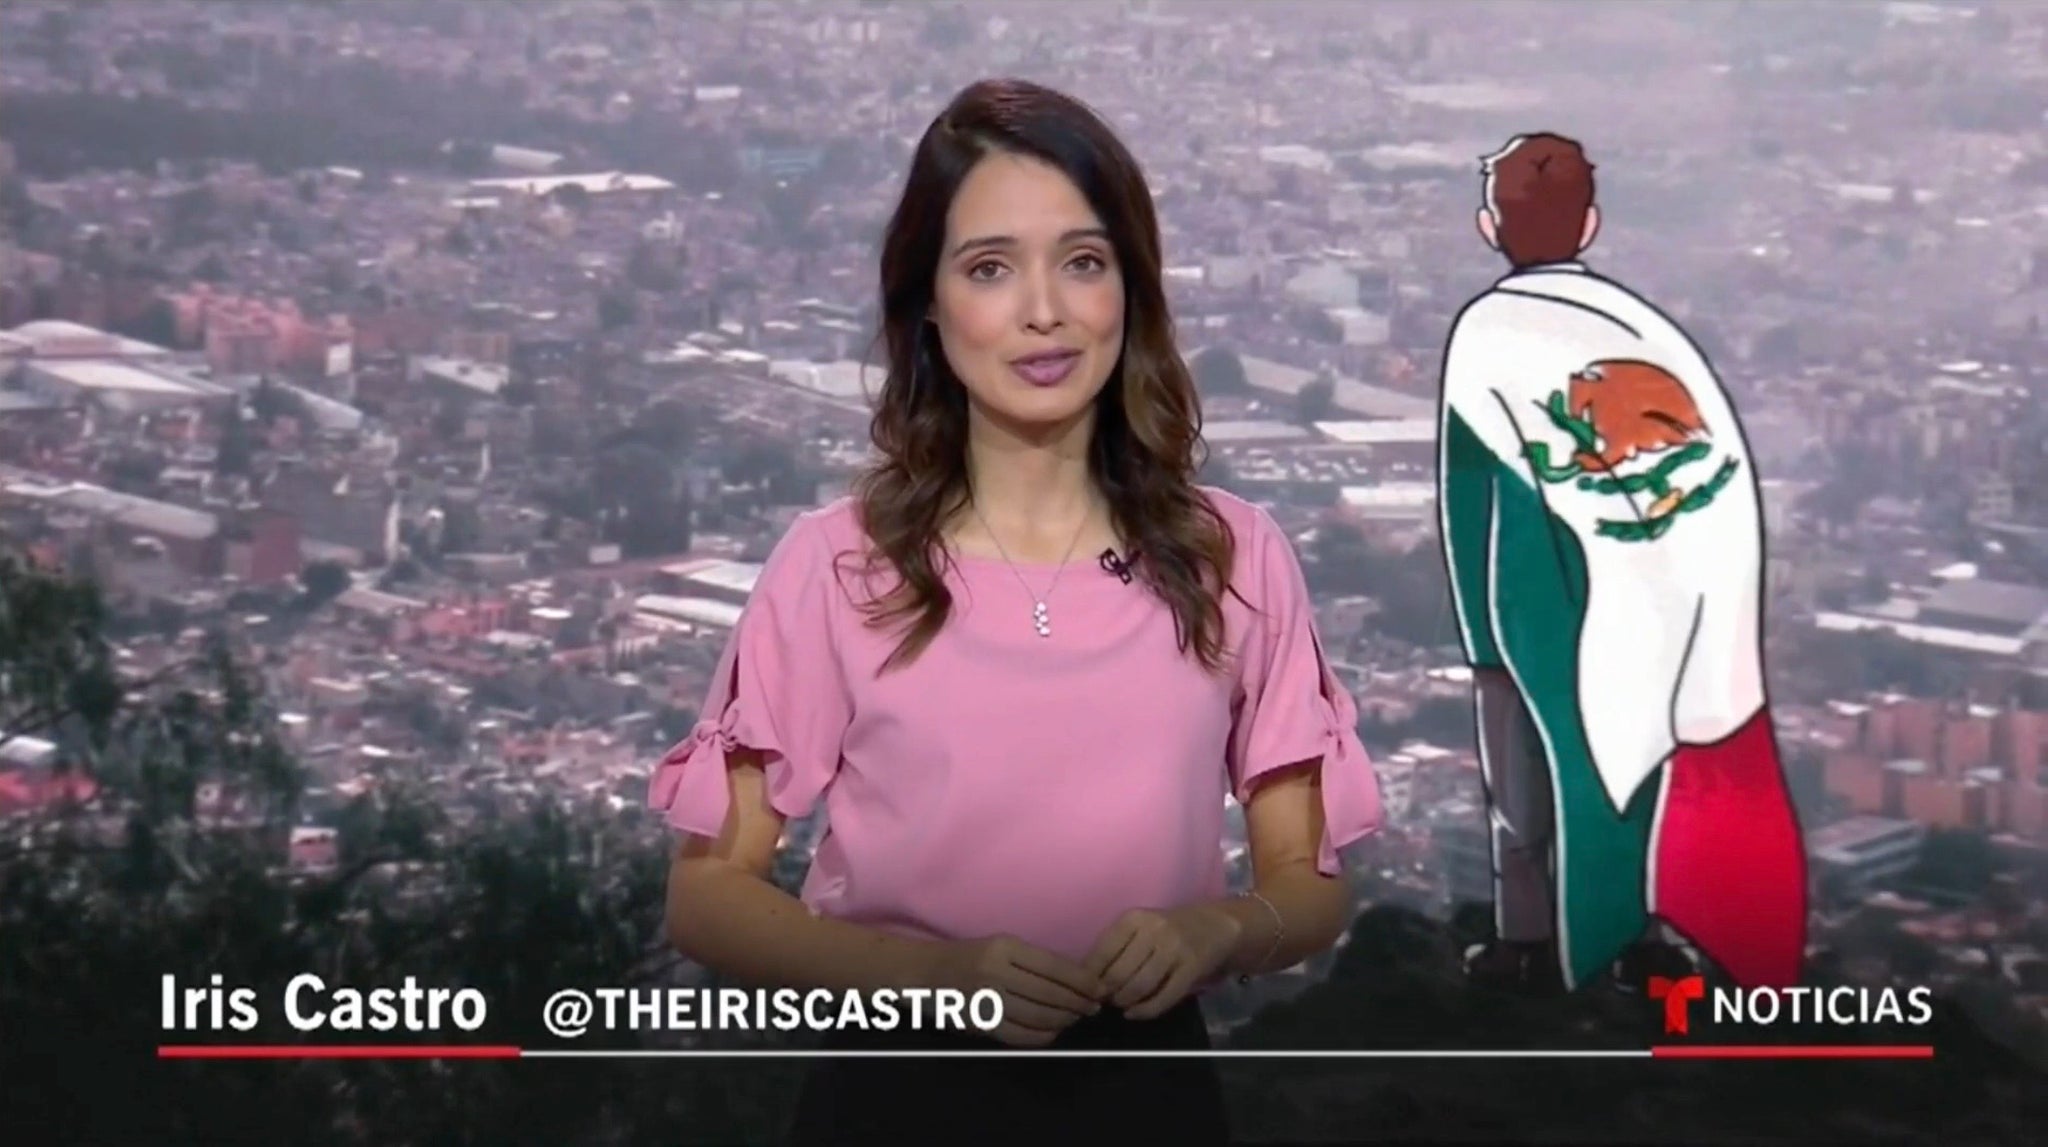 Telemundo Noticias about MEX I CAN PIN & GIFS.